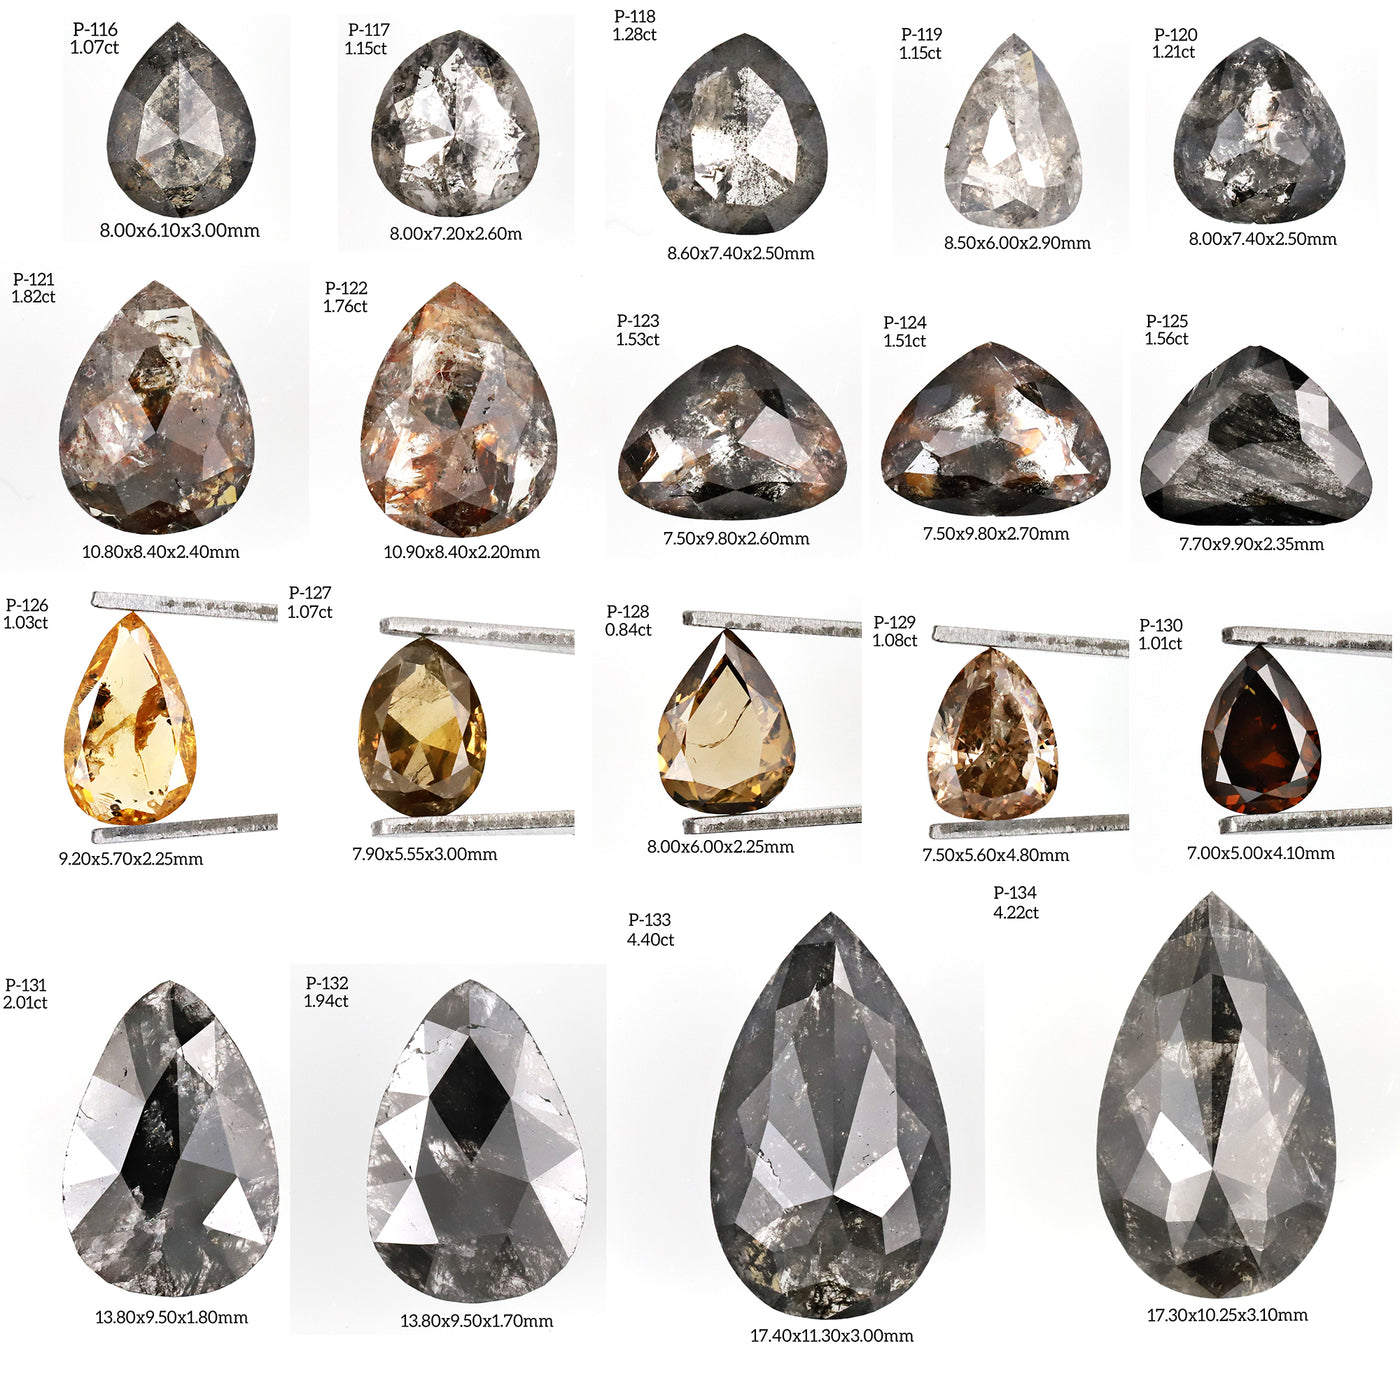 P121 - Salt and pepper pear diamond